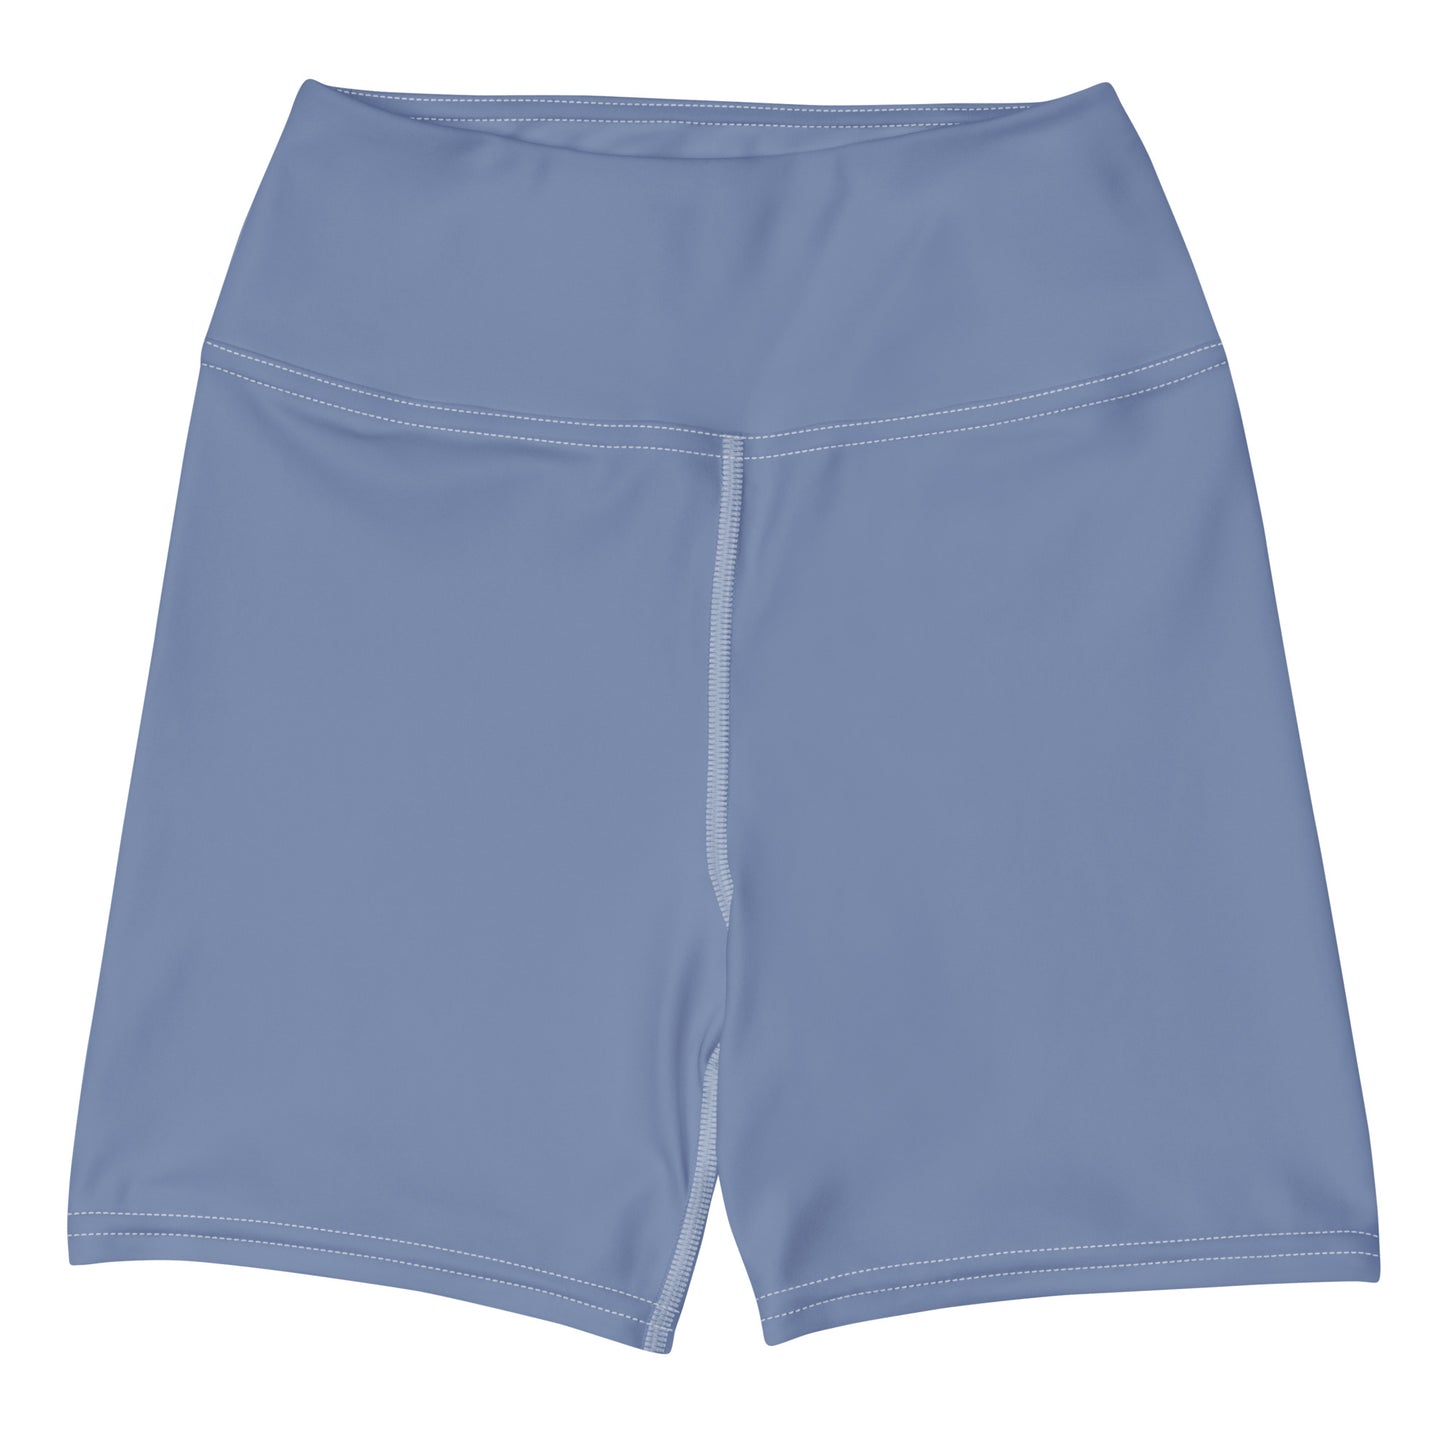 Garten Solid Blue High Waist Yoga Shorts / Bike Shorts with Inside Pocket